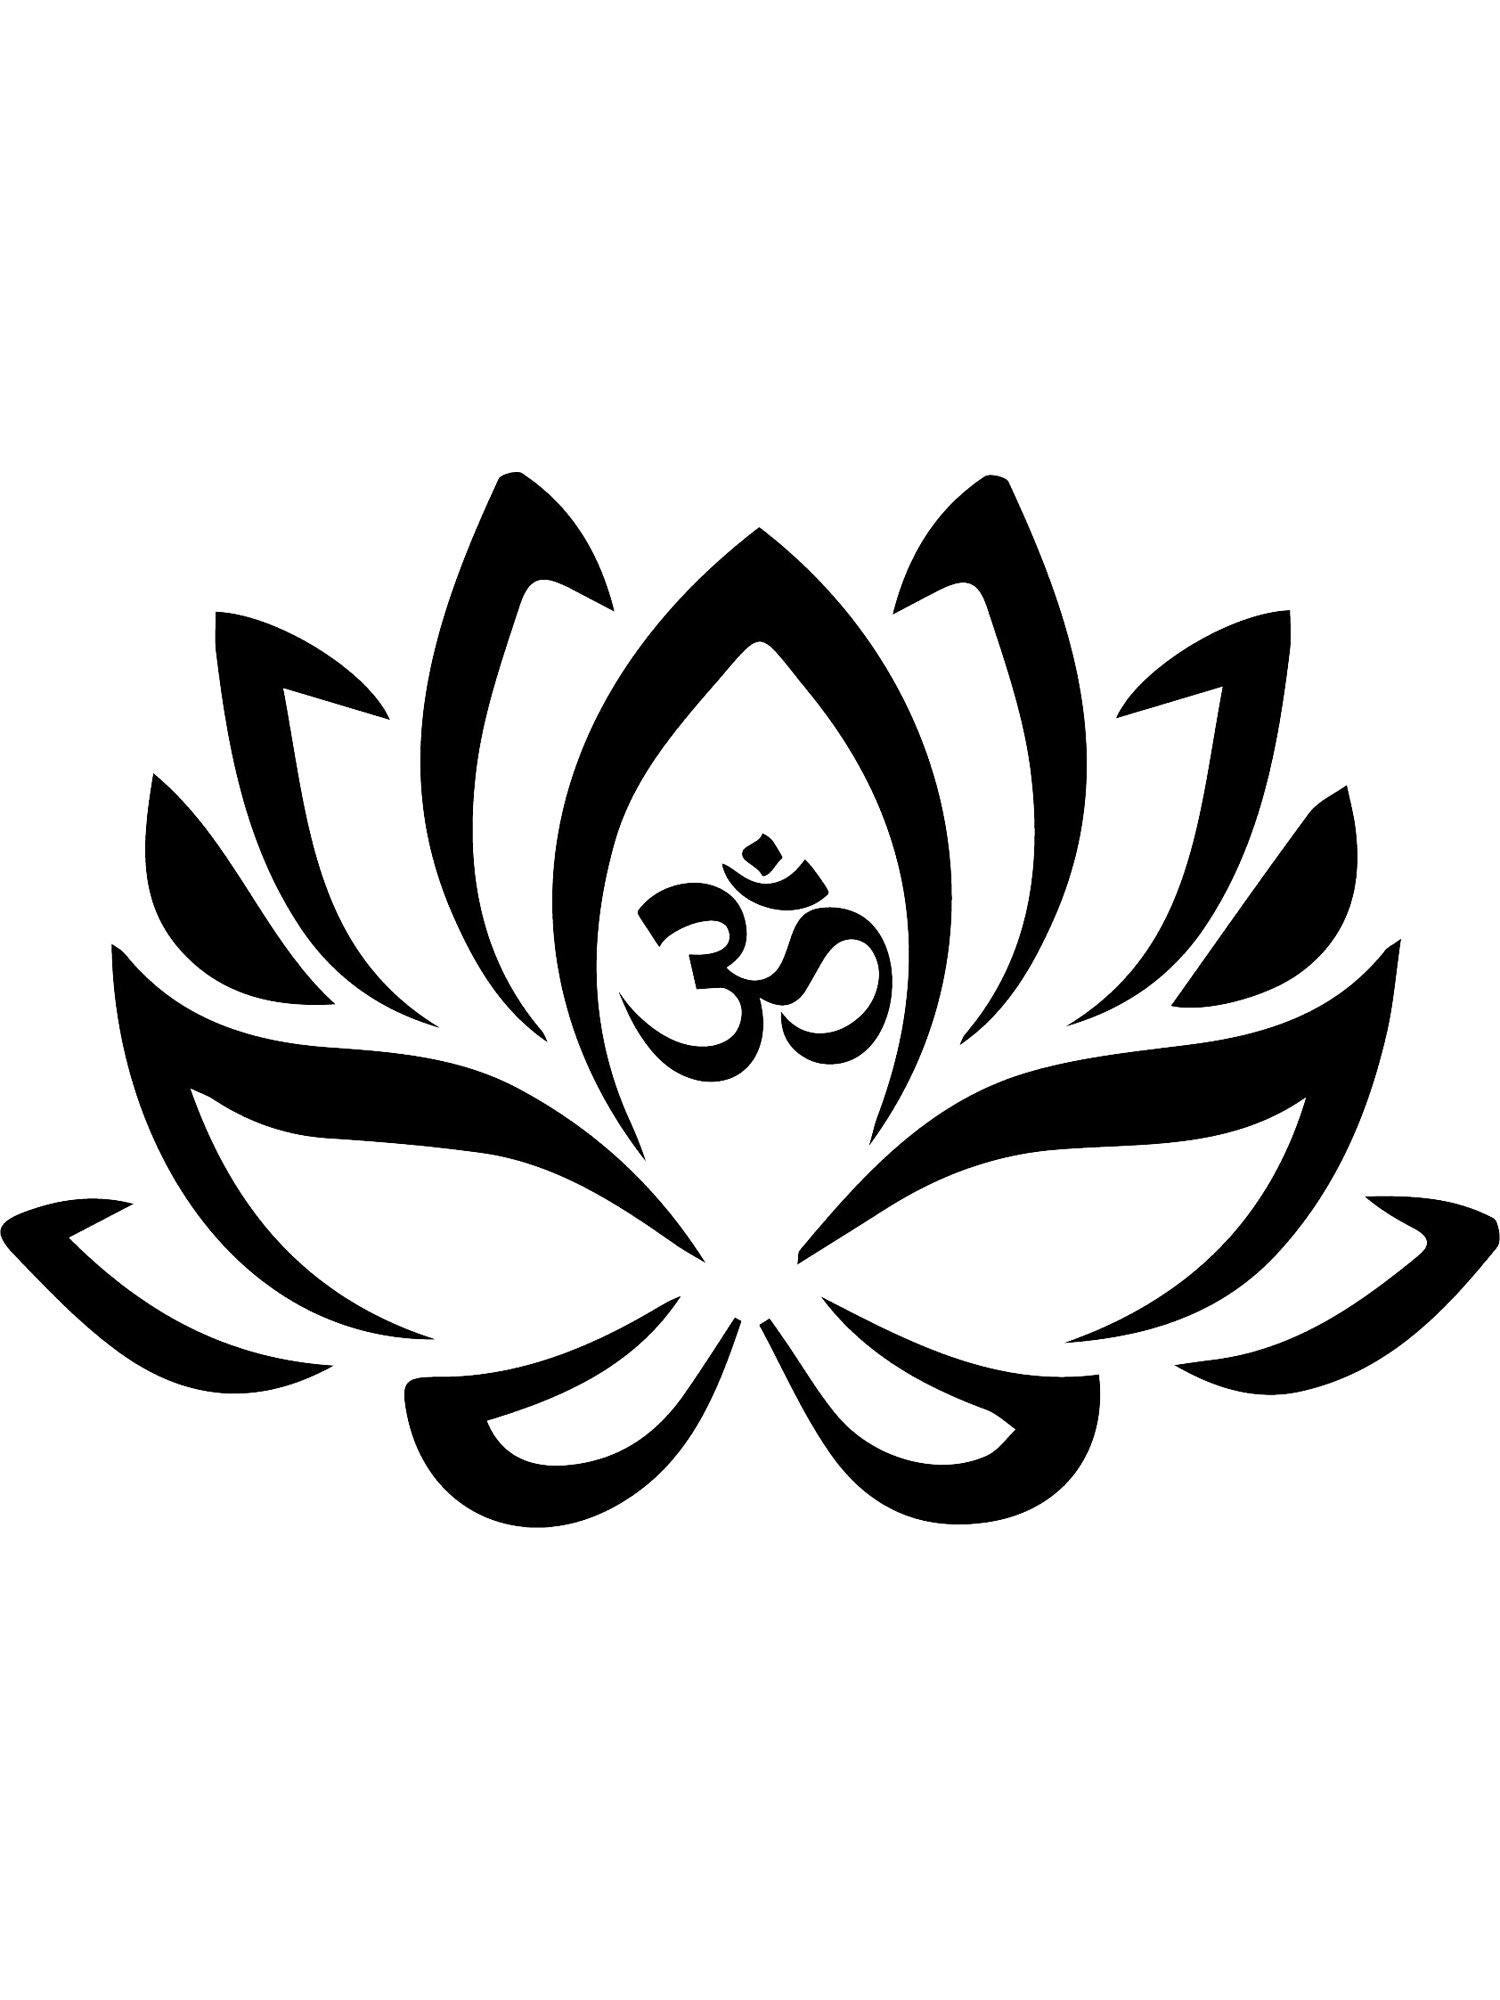 Что Означает Цветок Лотоса В Буддизме